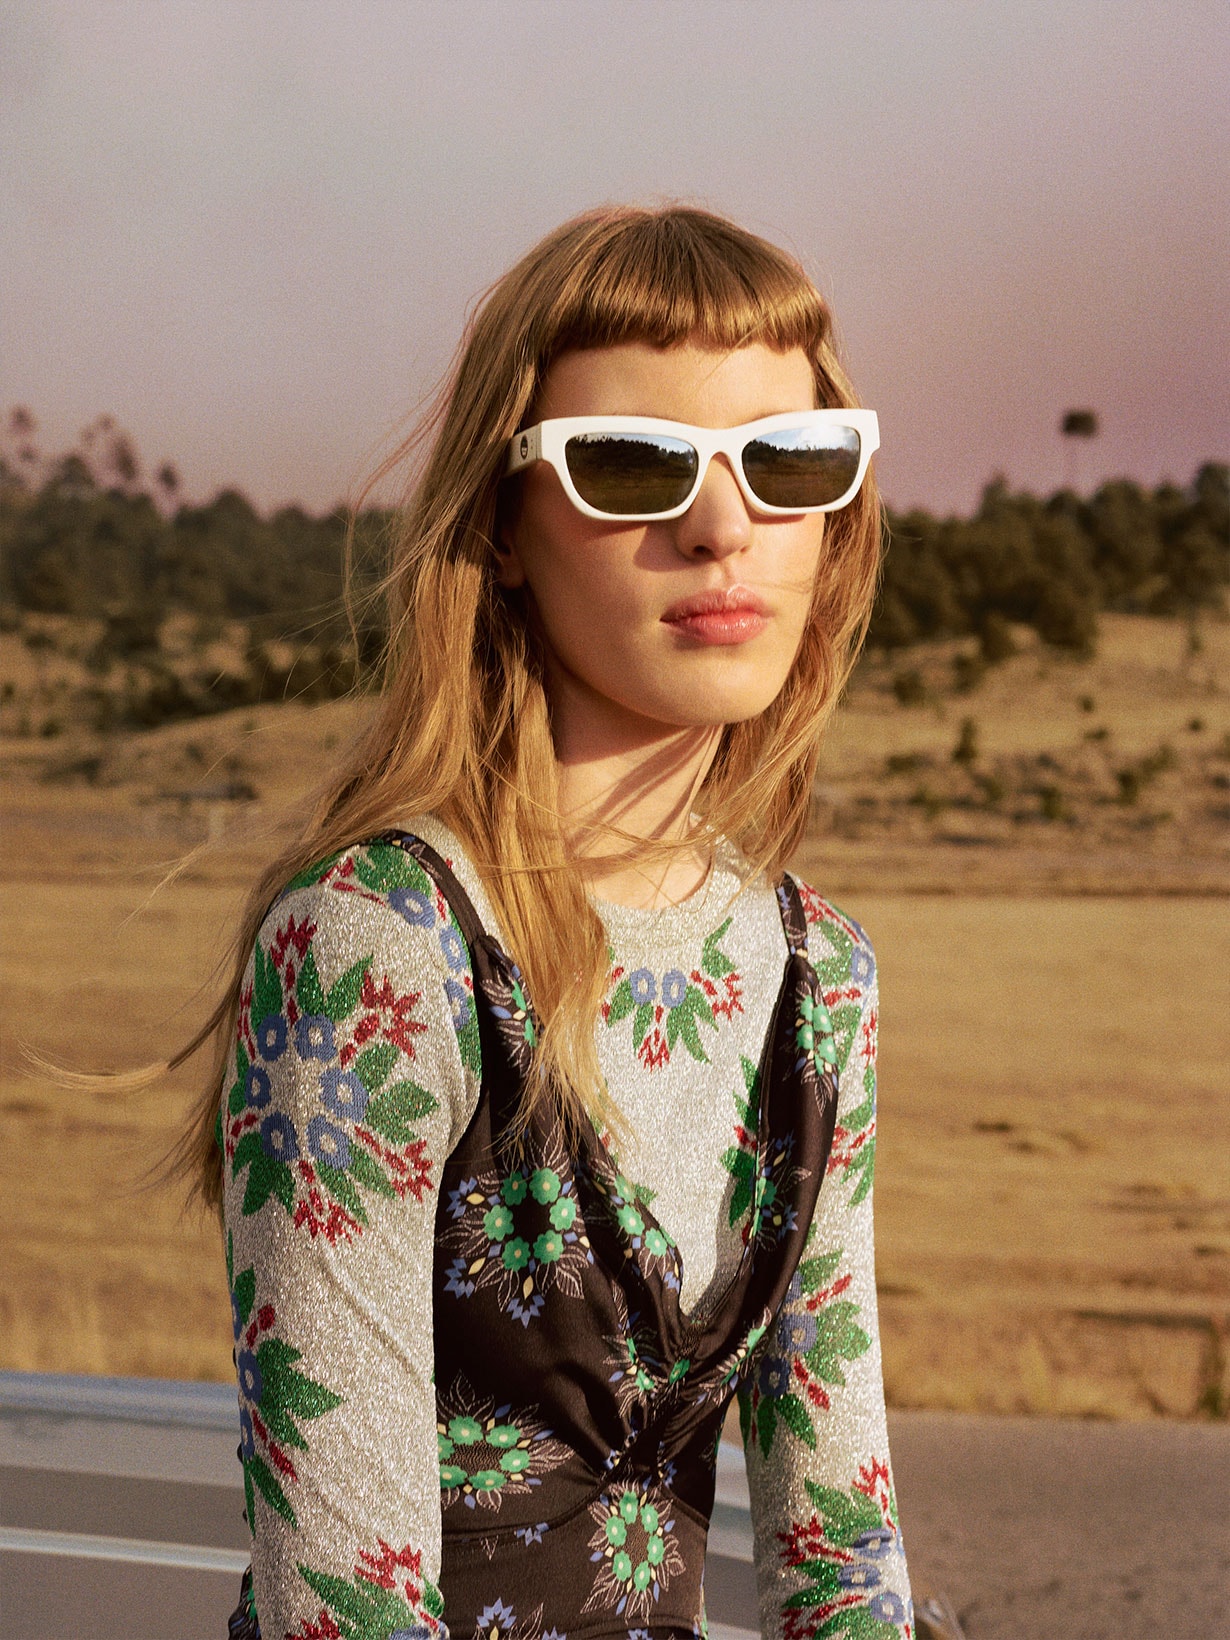 paco rabanne linda farrow eyewear sunglasses collaboration floral top